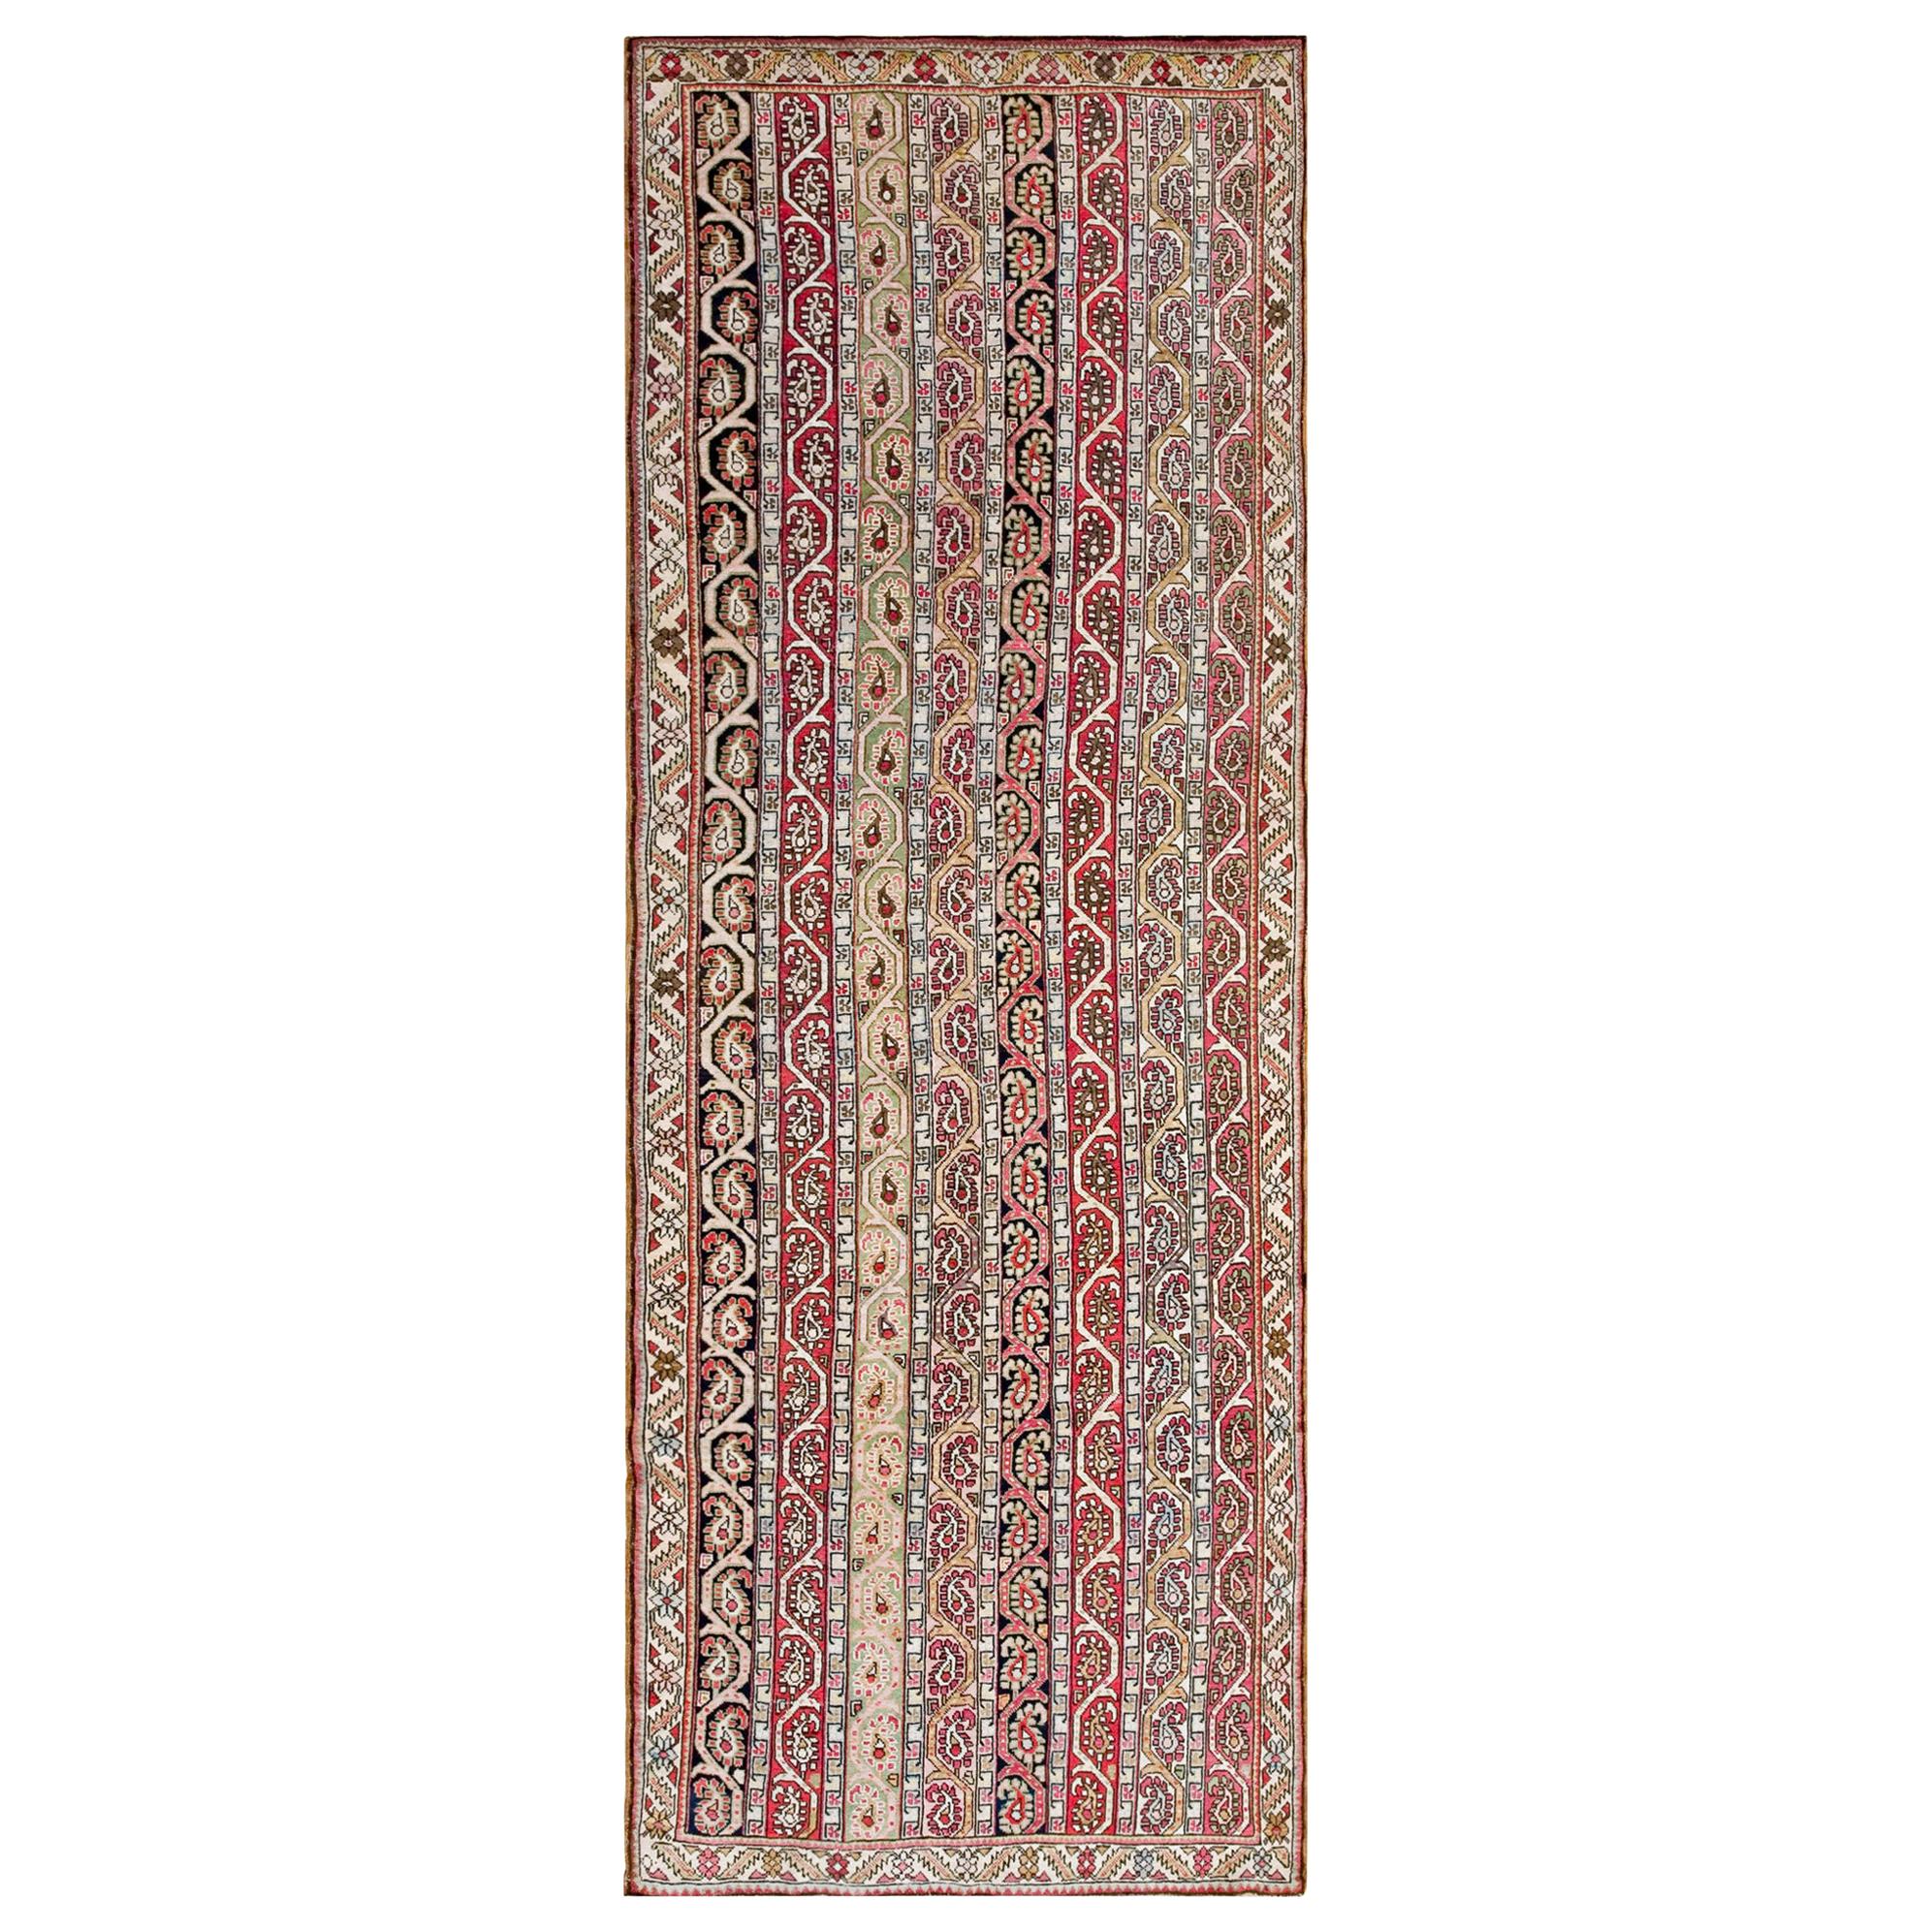 19th Century Caucasian Karabagh Carpet ( 4'2" x 11'8" - 127 x 356 )